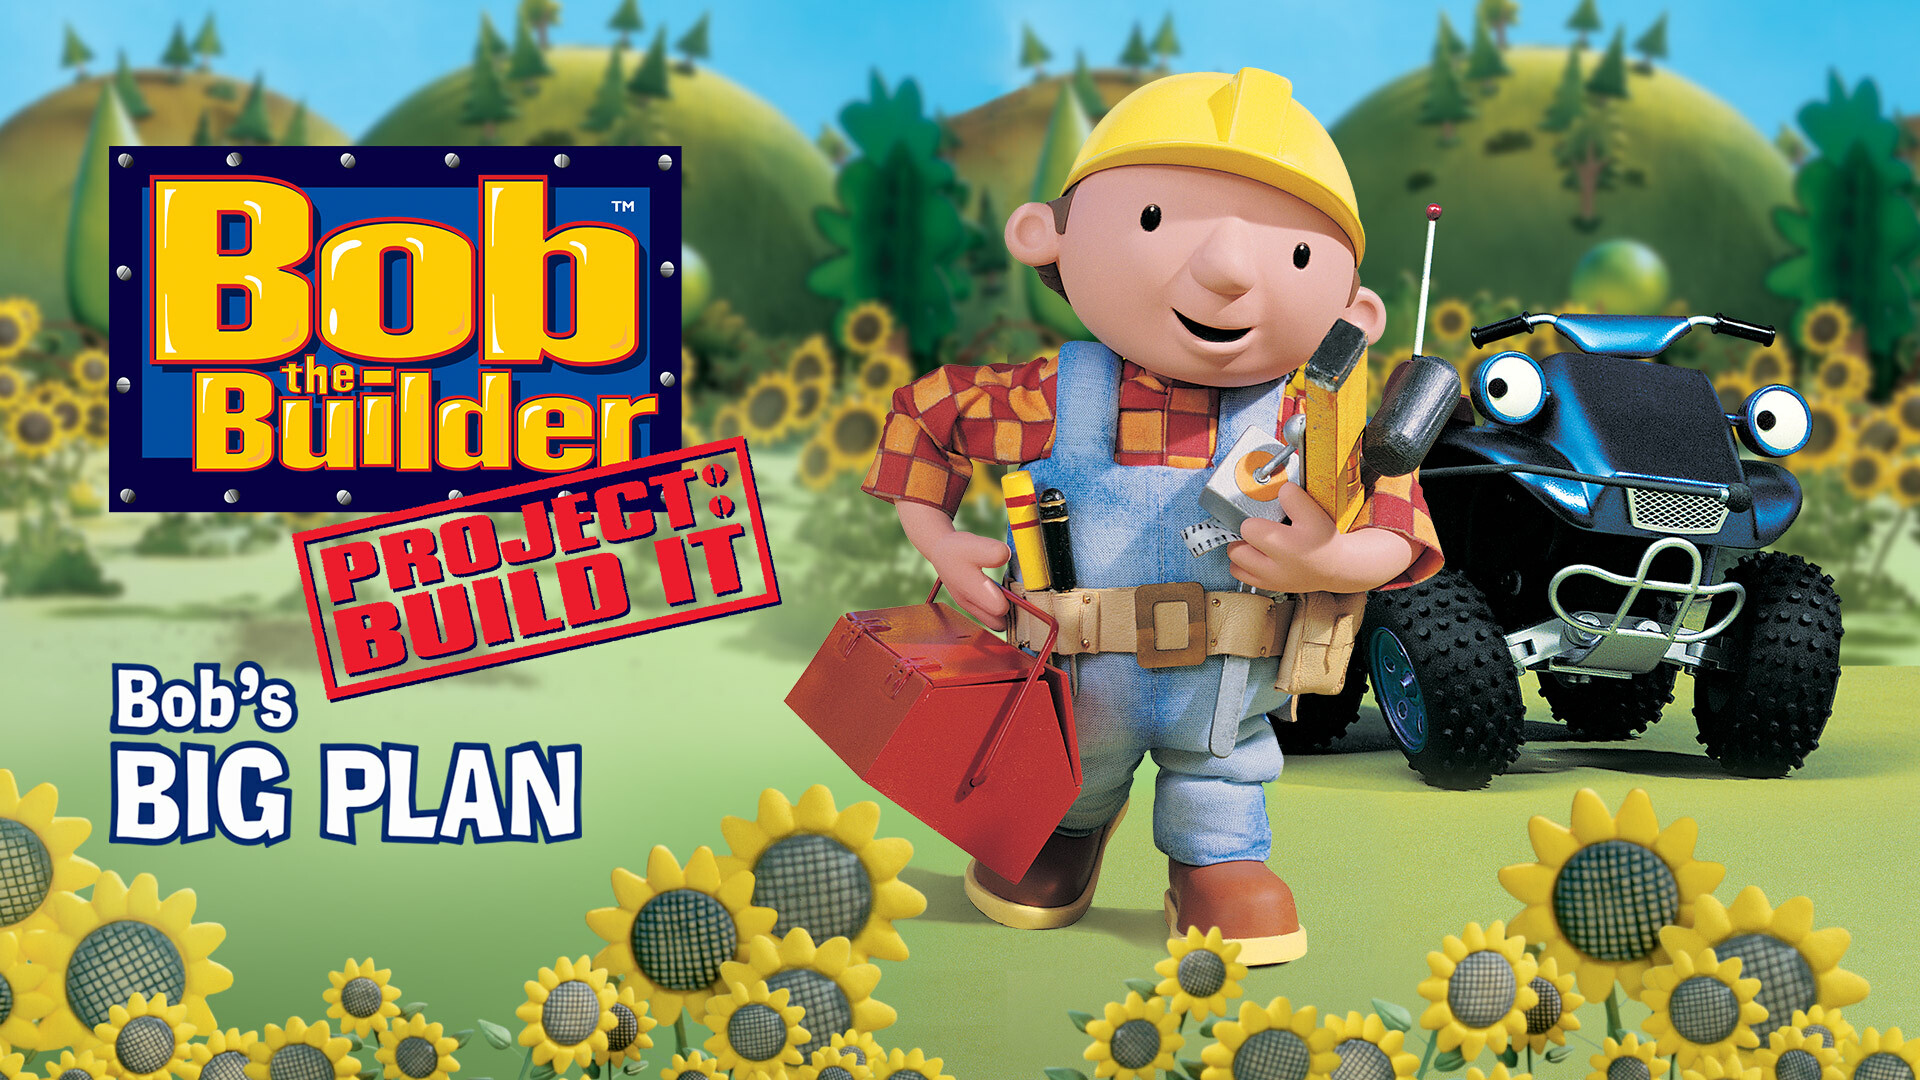 Bob the Builder: Bob's Big Plan - Watch Full Movie on Paramount Plus